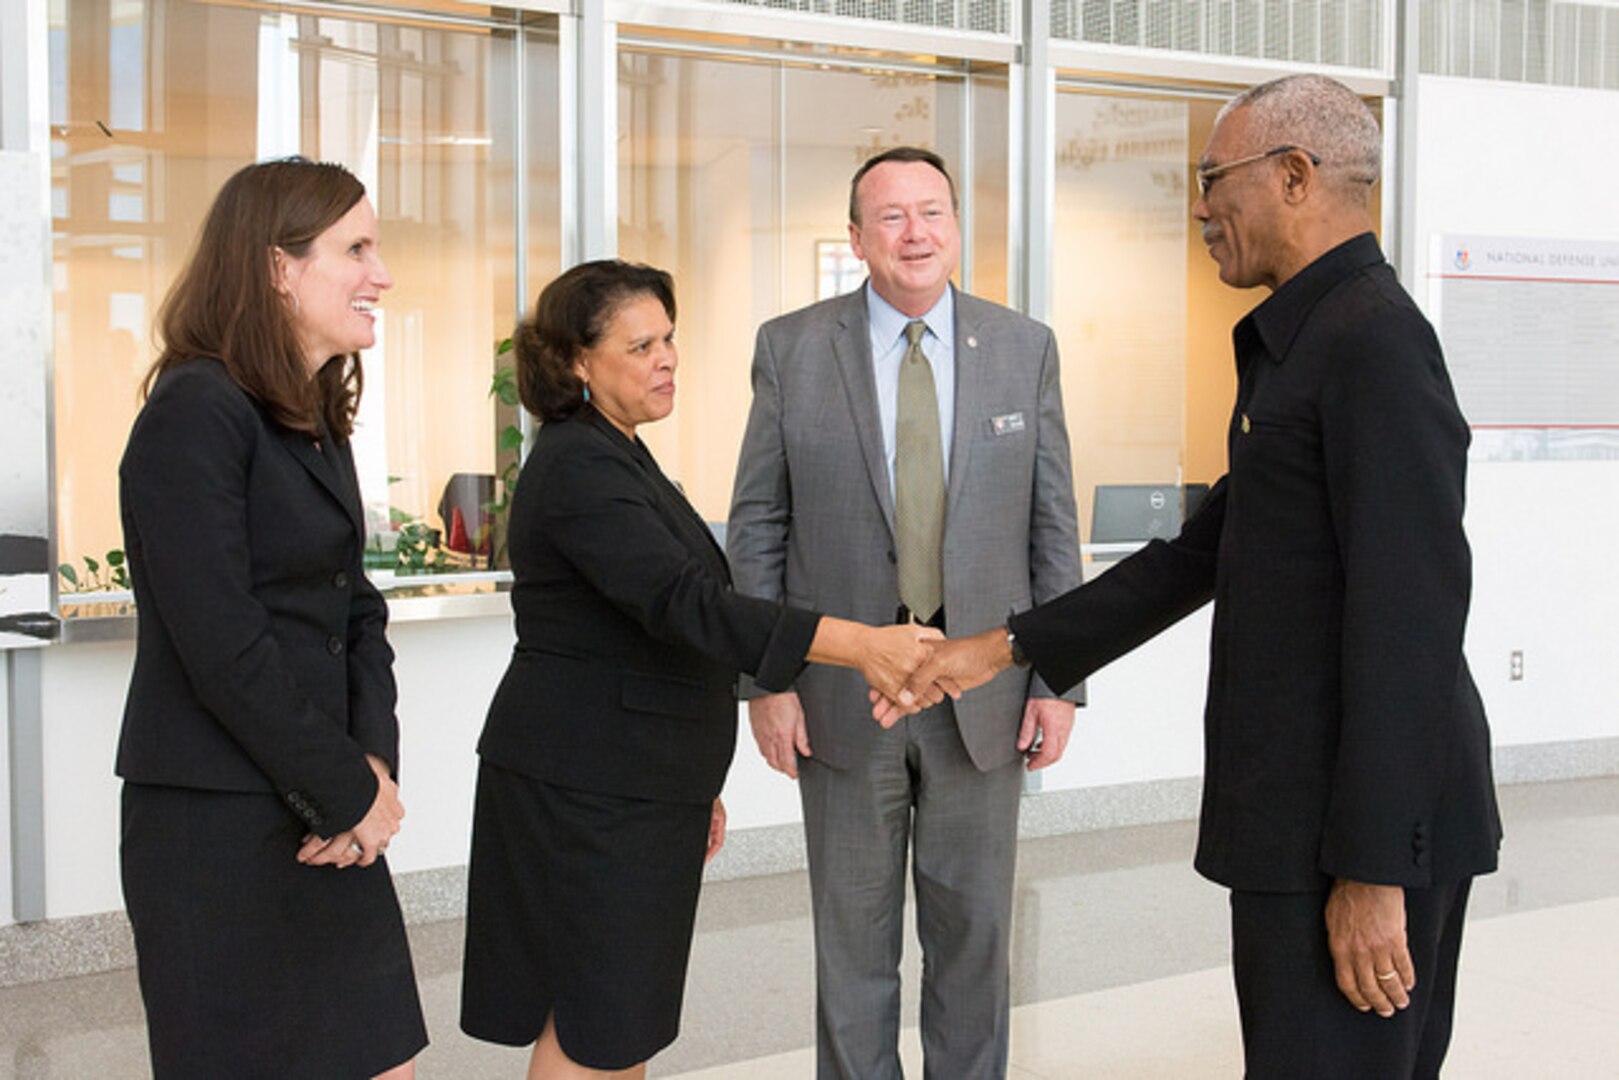 President Granger is greeted by NDU Senior Vice President Ambassador Wanda Nesbitt and Perry Center Director Mark Wilkins